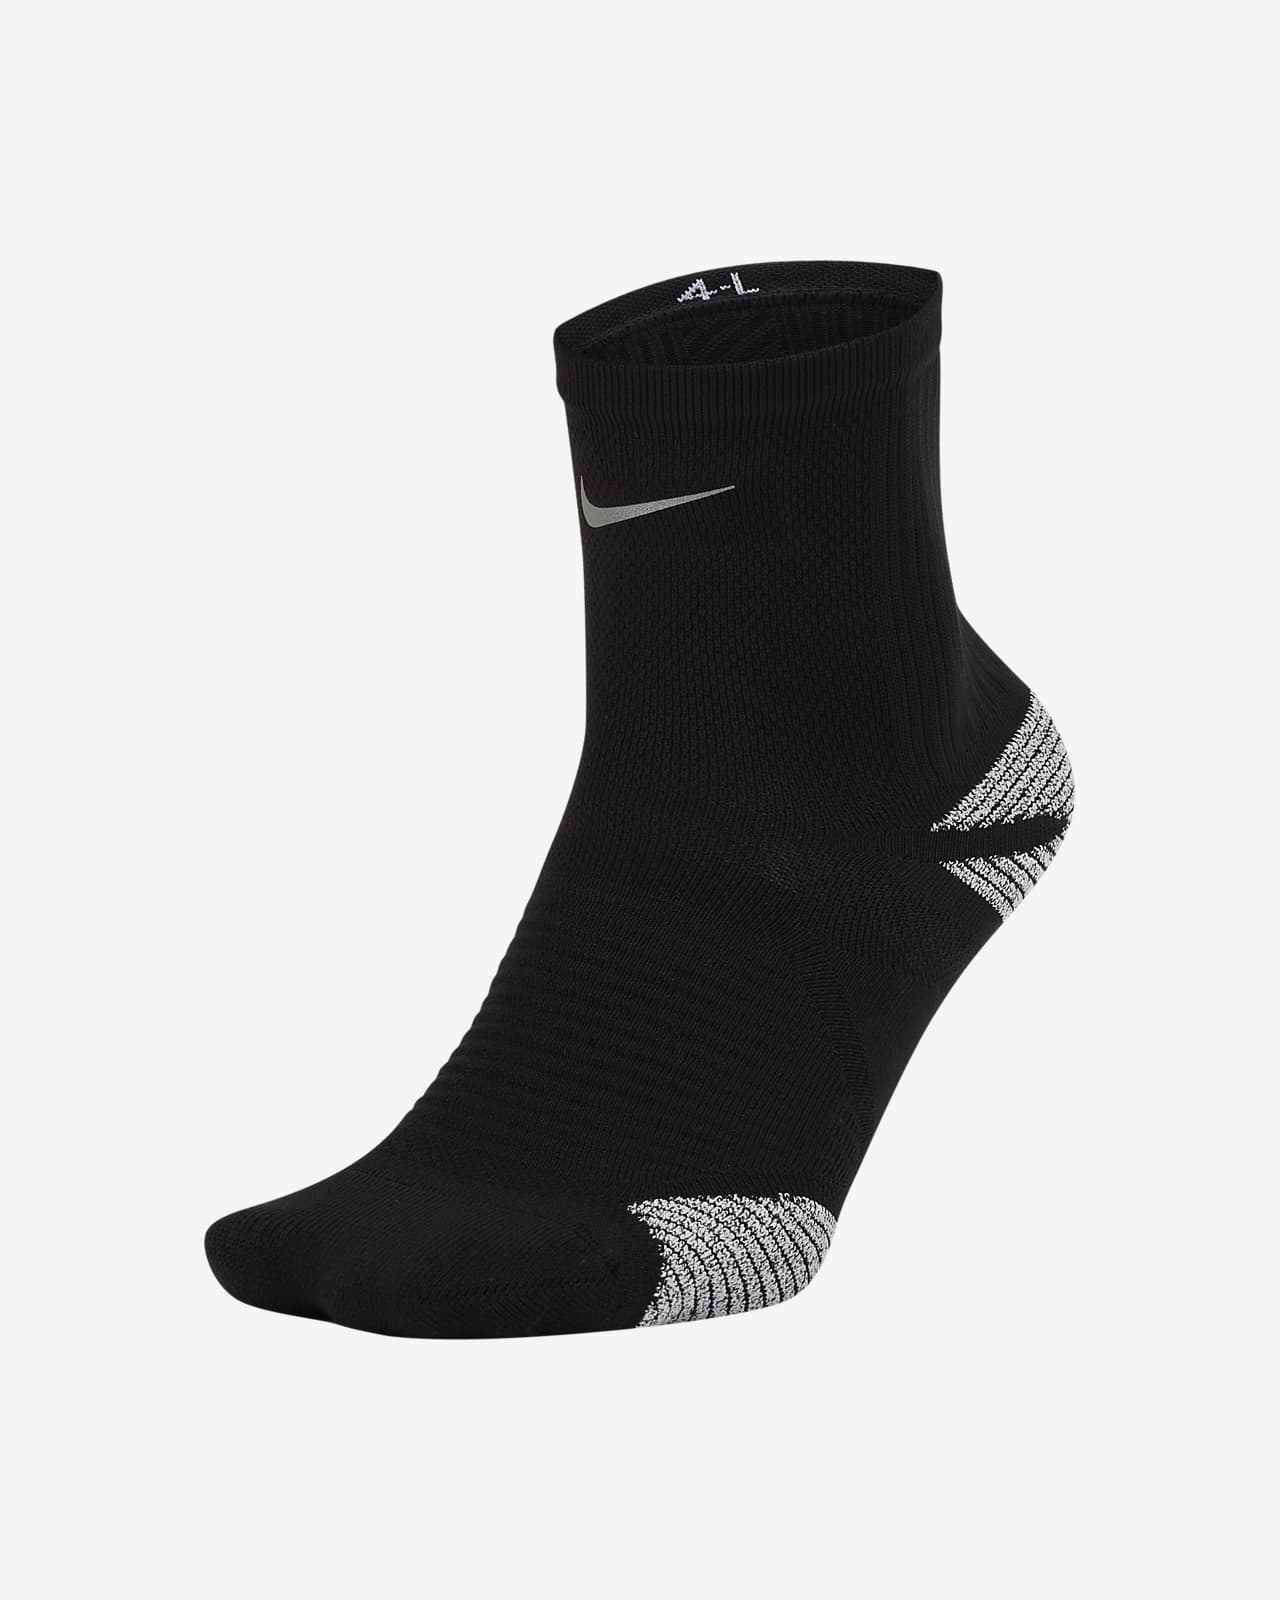 Nike Racing Ankle Socks. Nike LU